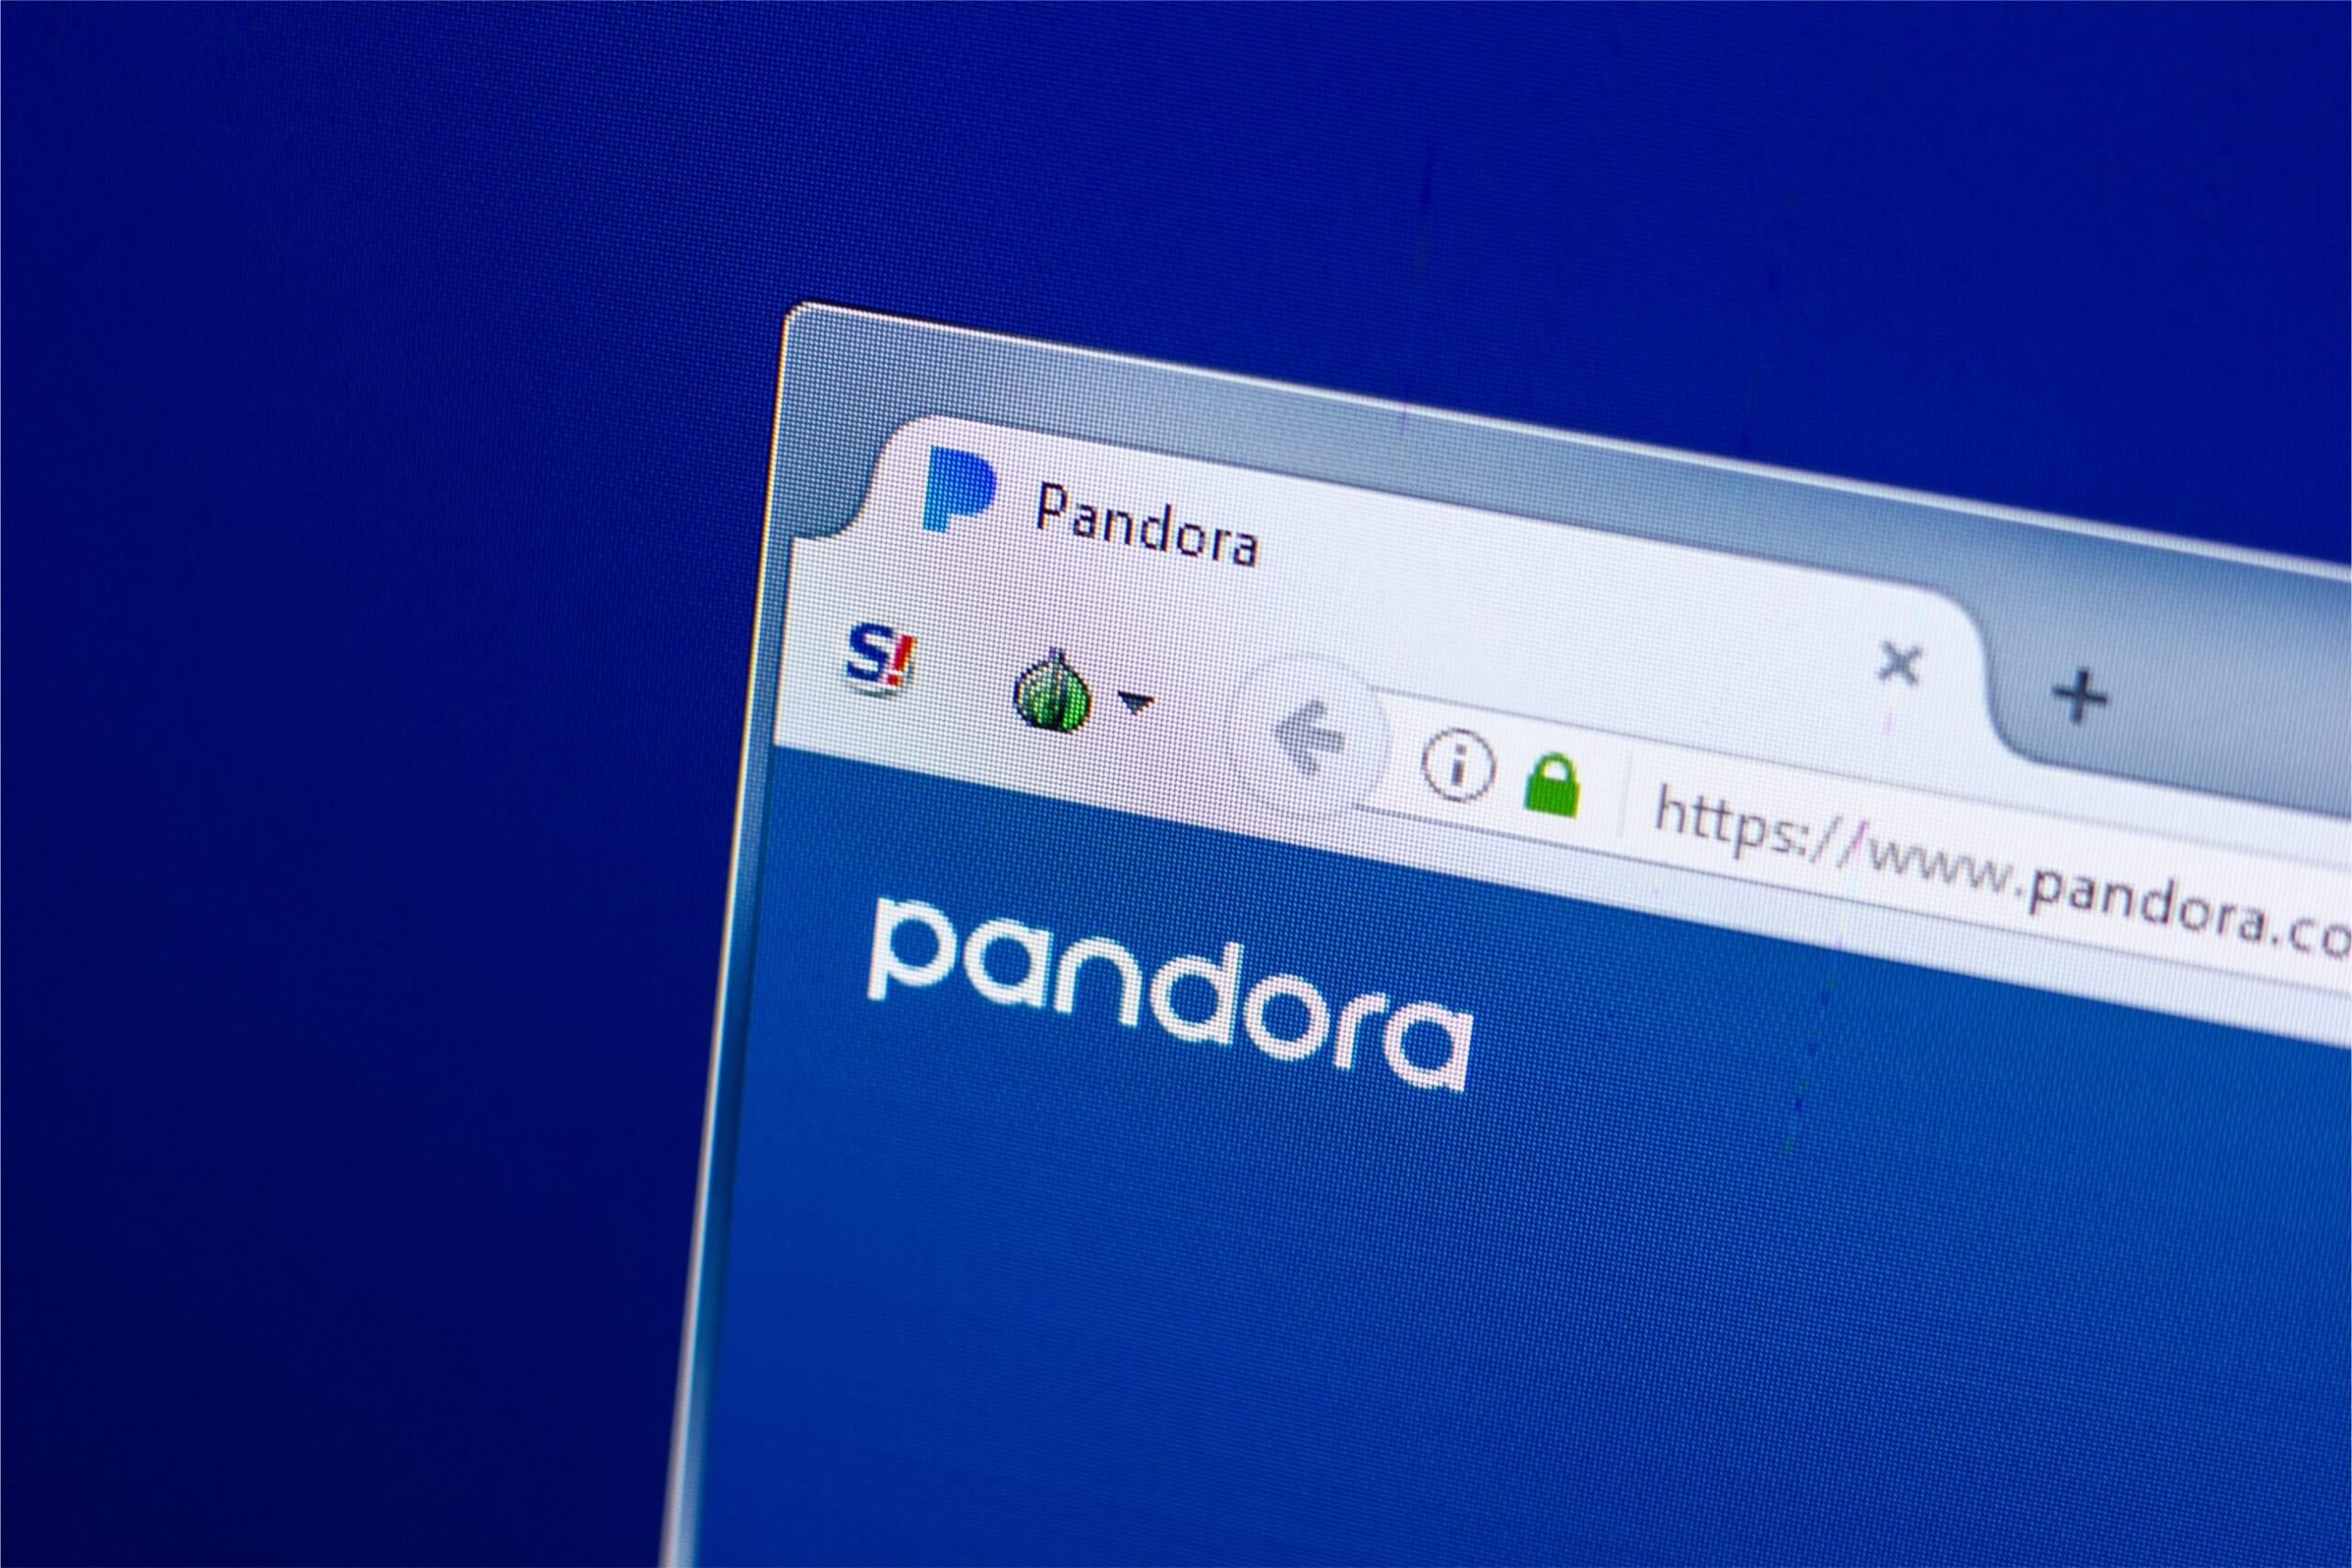 Pandora launches desktop app for macOS, Windows coming later